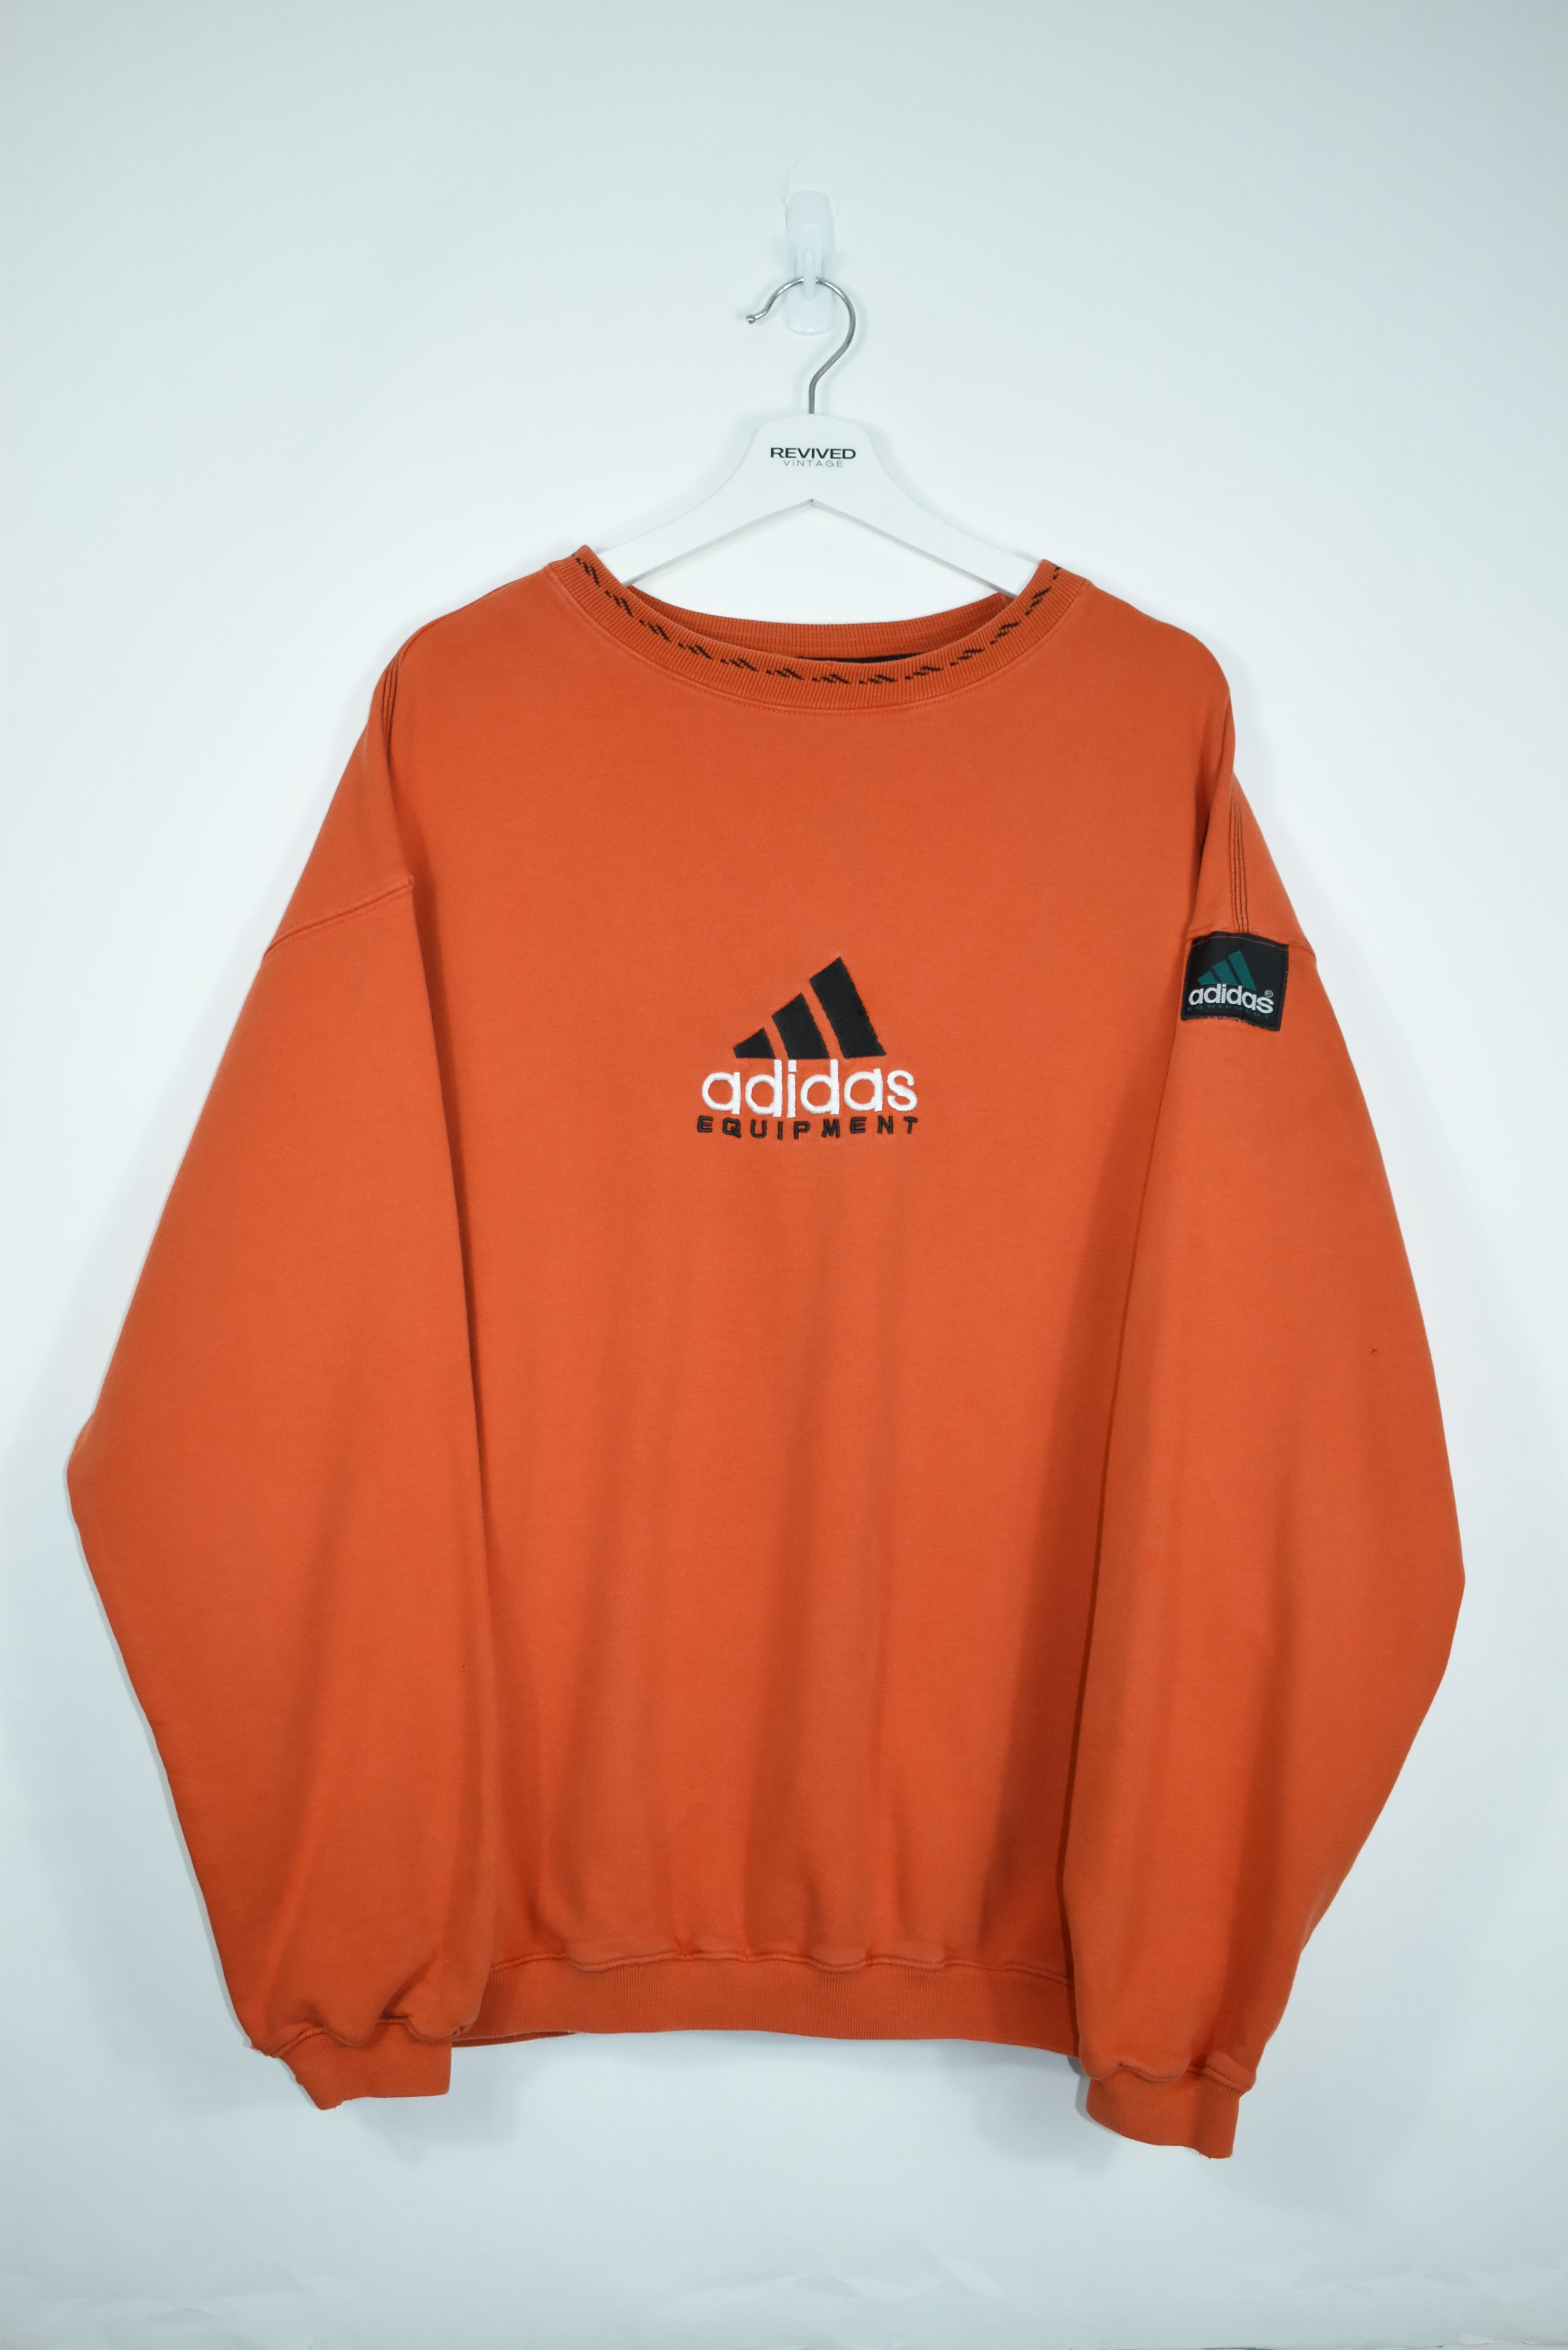 Vintage Adidas Equipment Rare Embroidery Sweatshirt Large